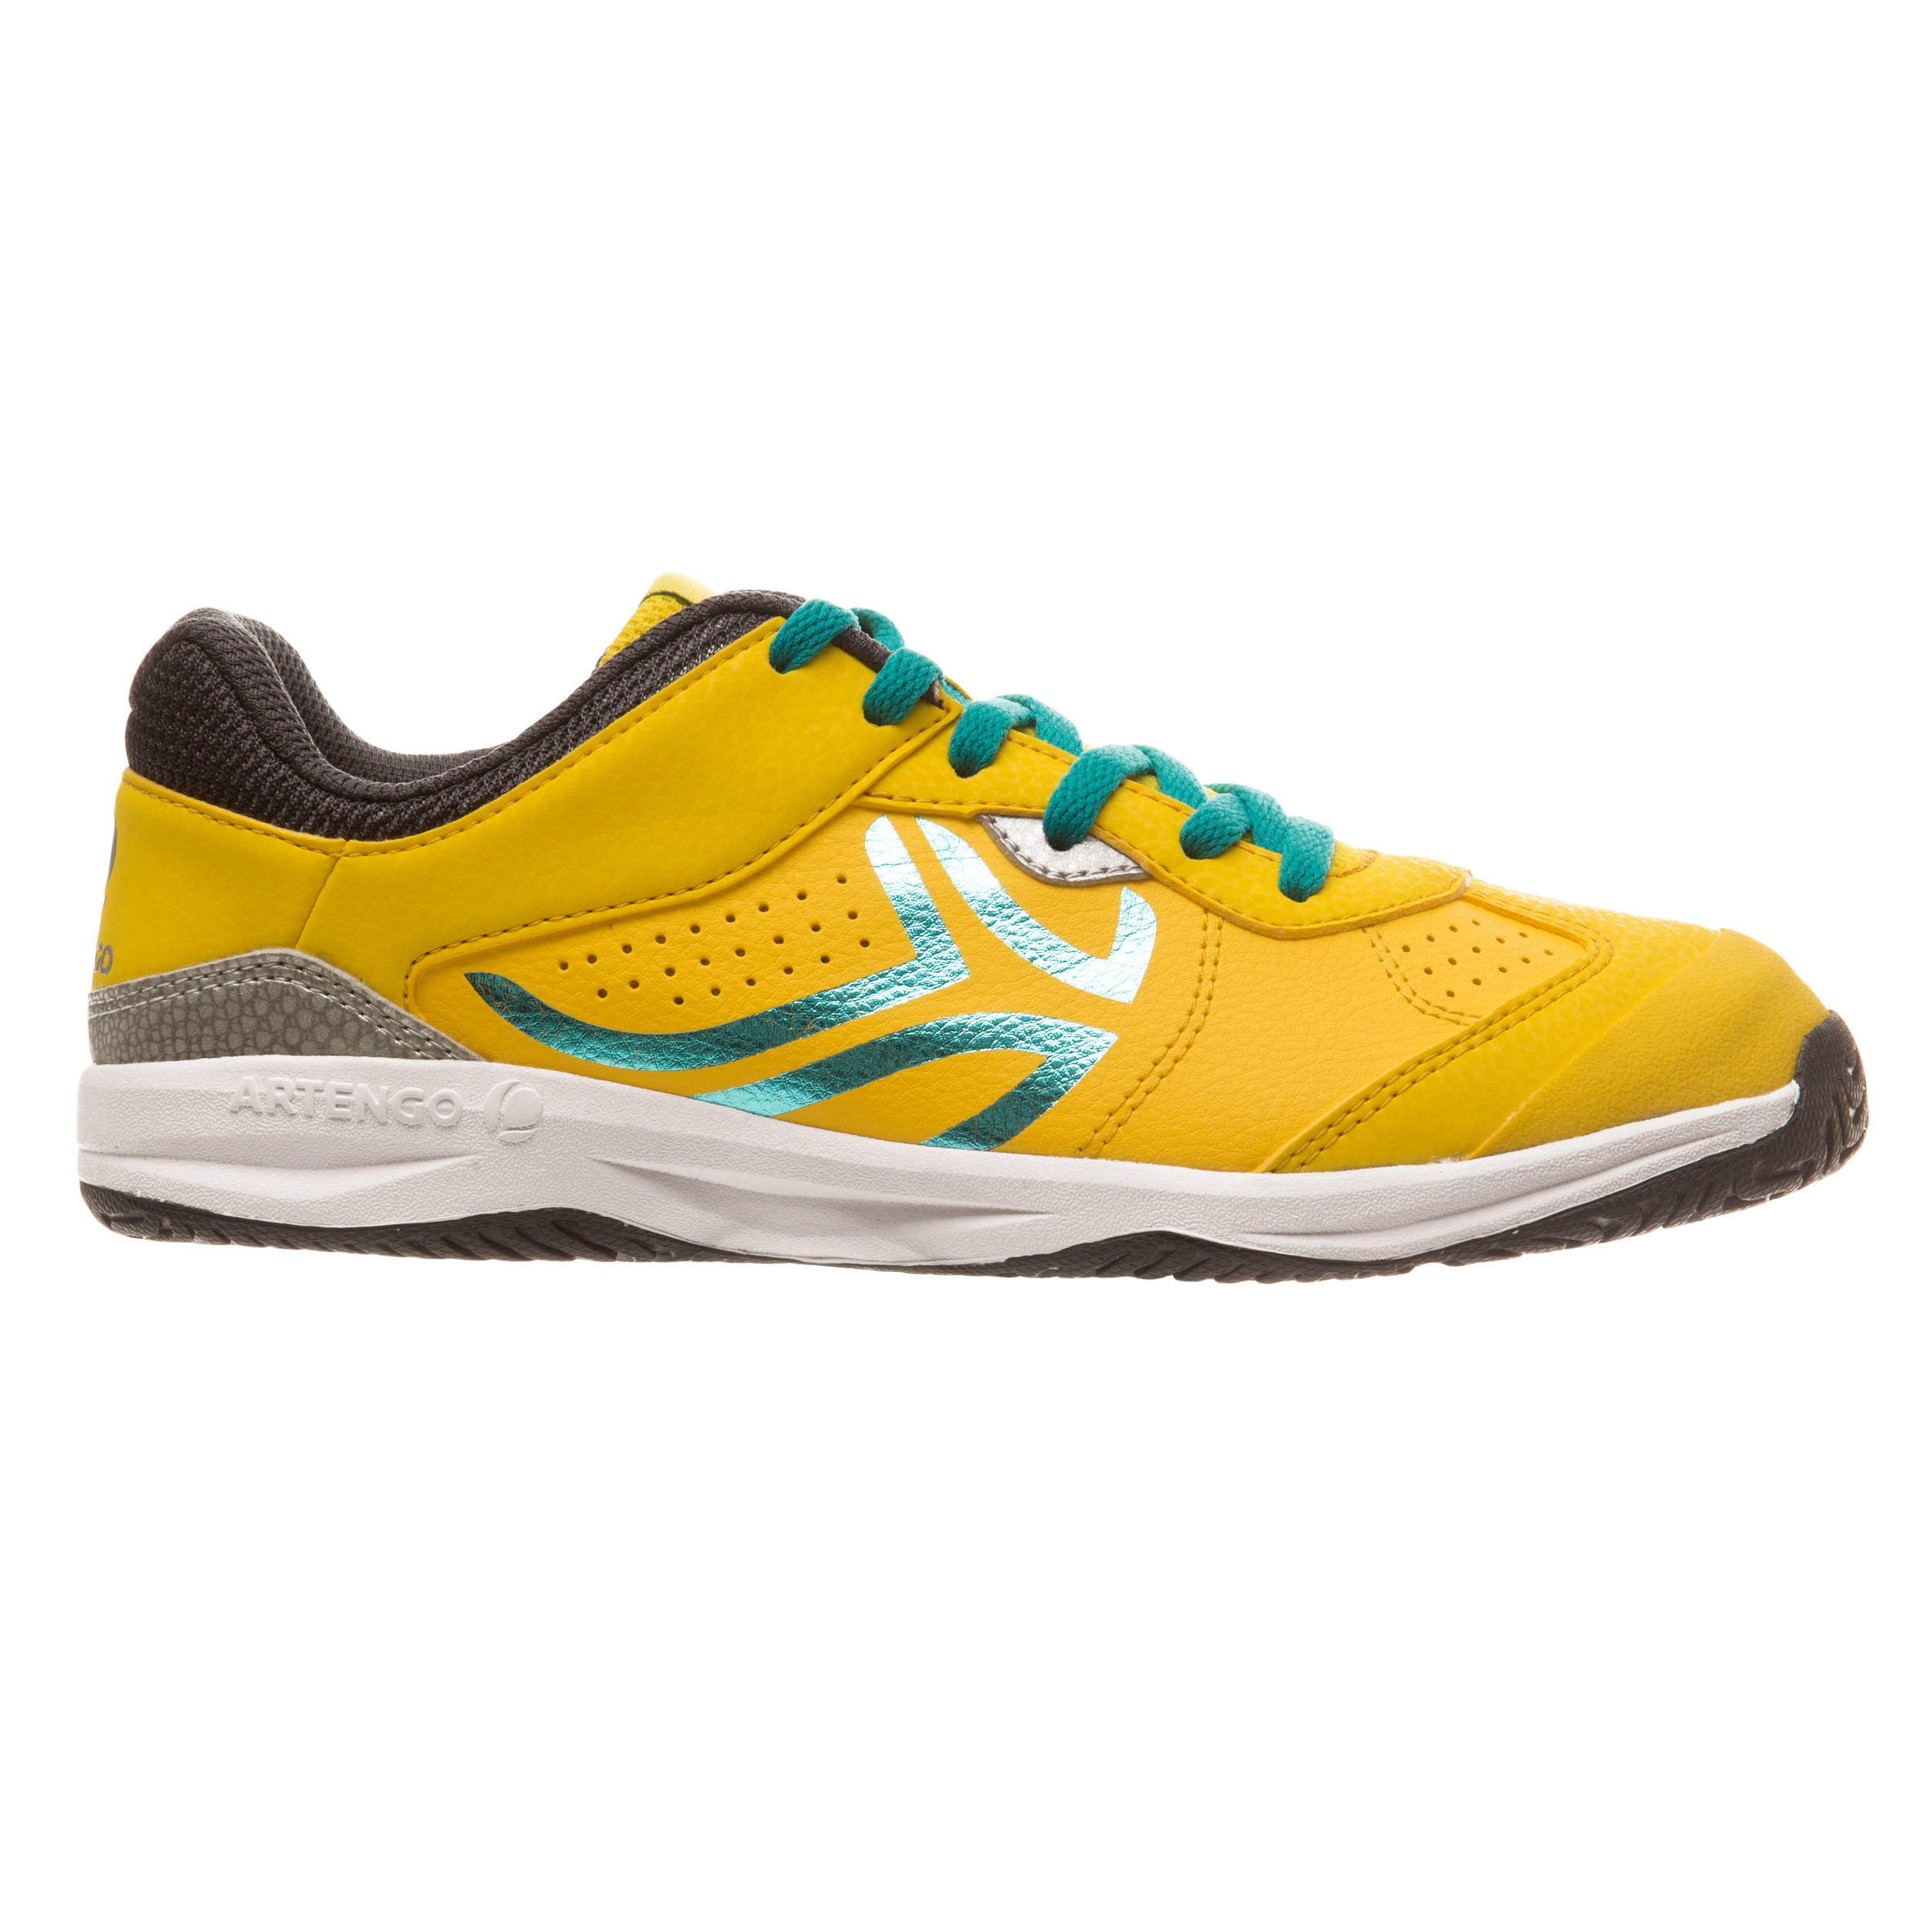 ARTENGO TS760 Kids' Lace-Up Tennis Shoes - Yellow